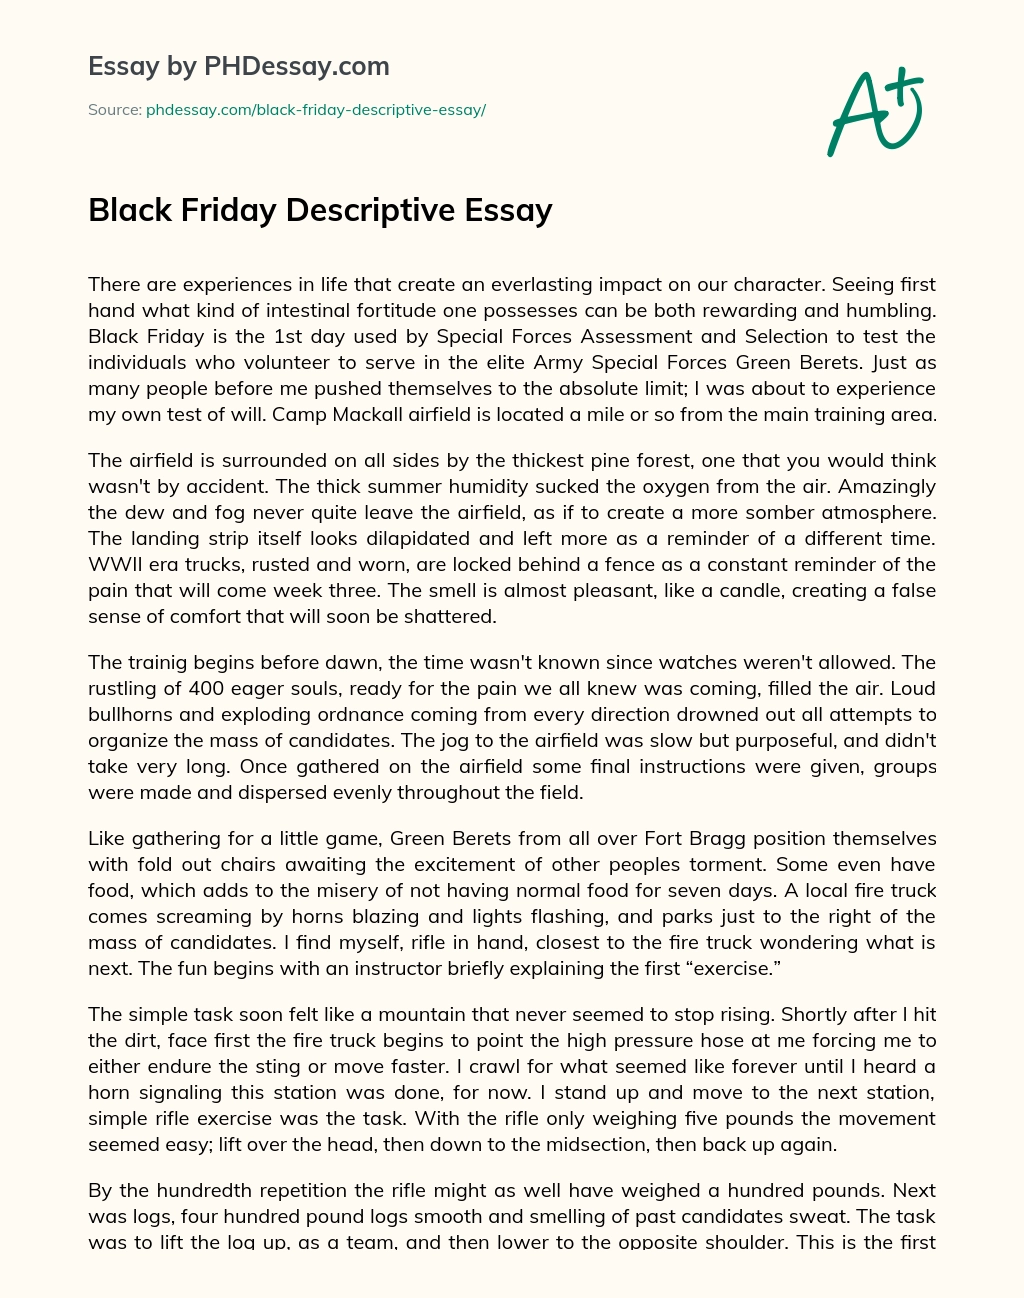 Black Friday Descriptive Essay essay